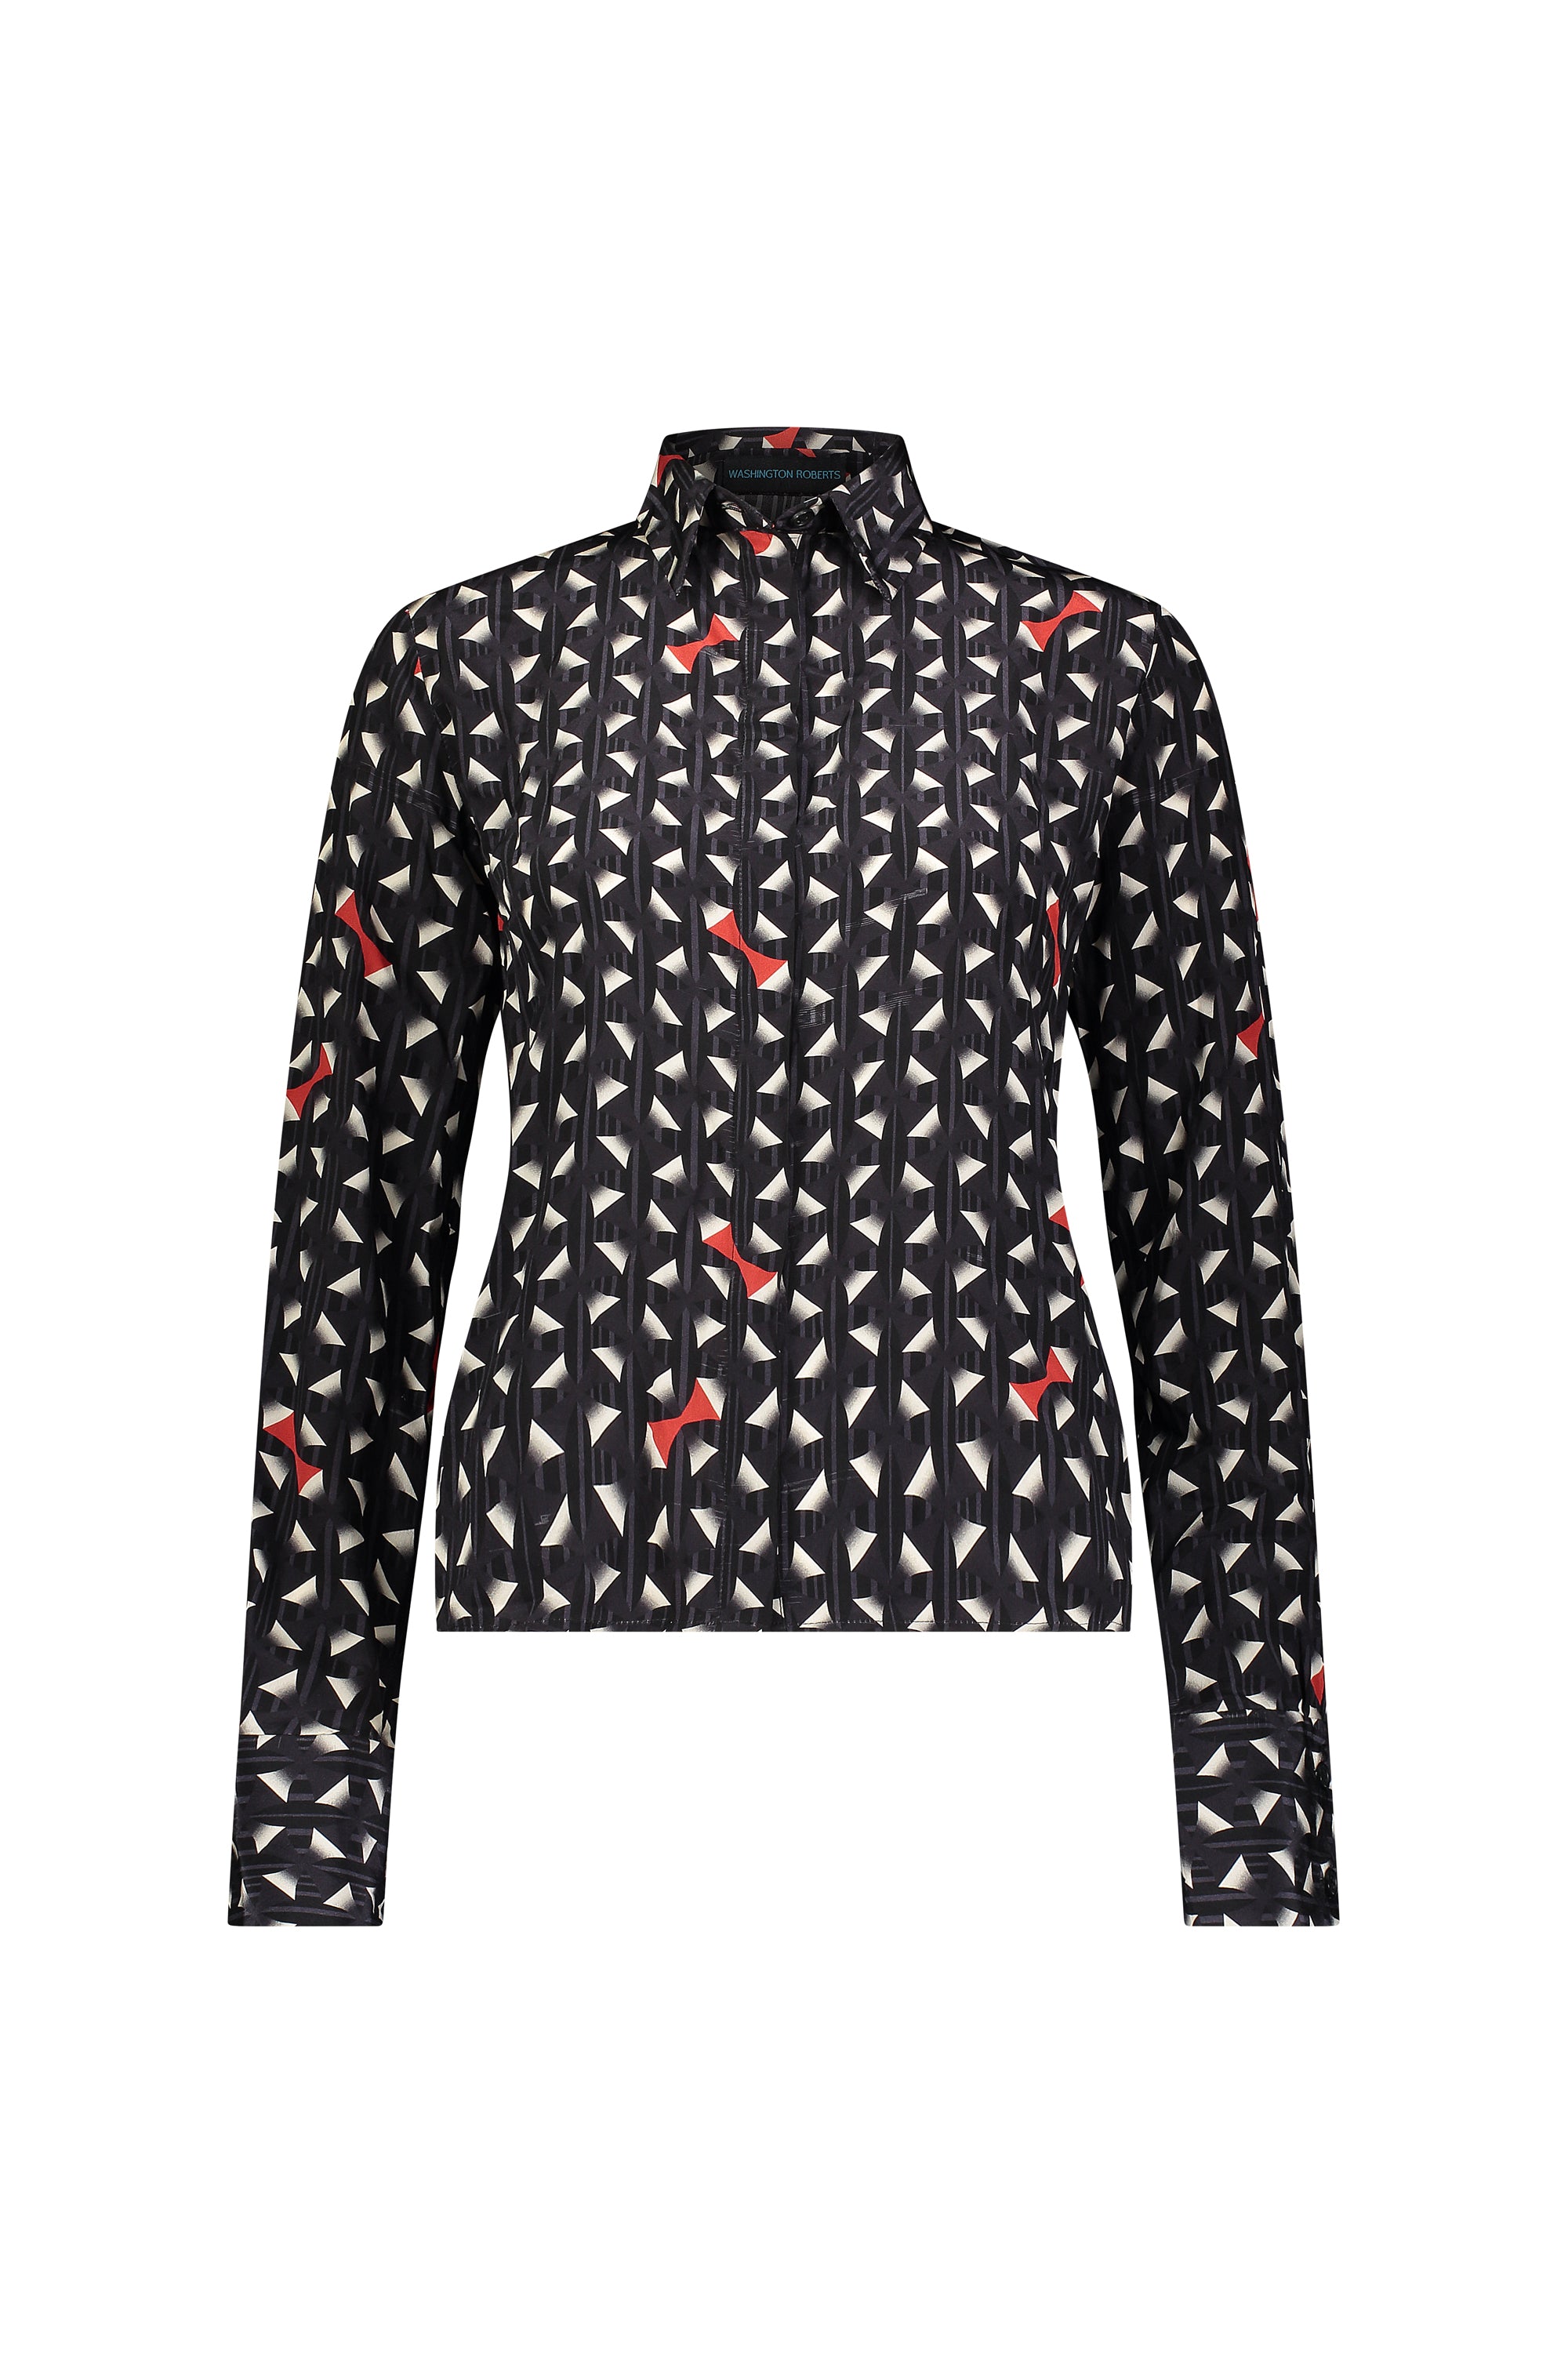 Washington Roberts Osa Shirt in Edo Dancer Geometric print - Silk Crepe de chine blouse